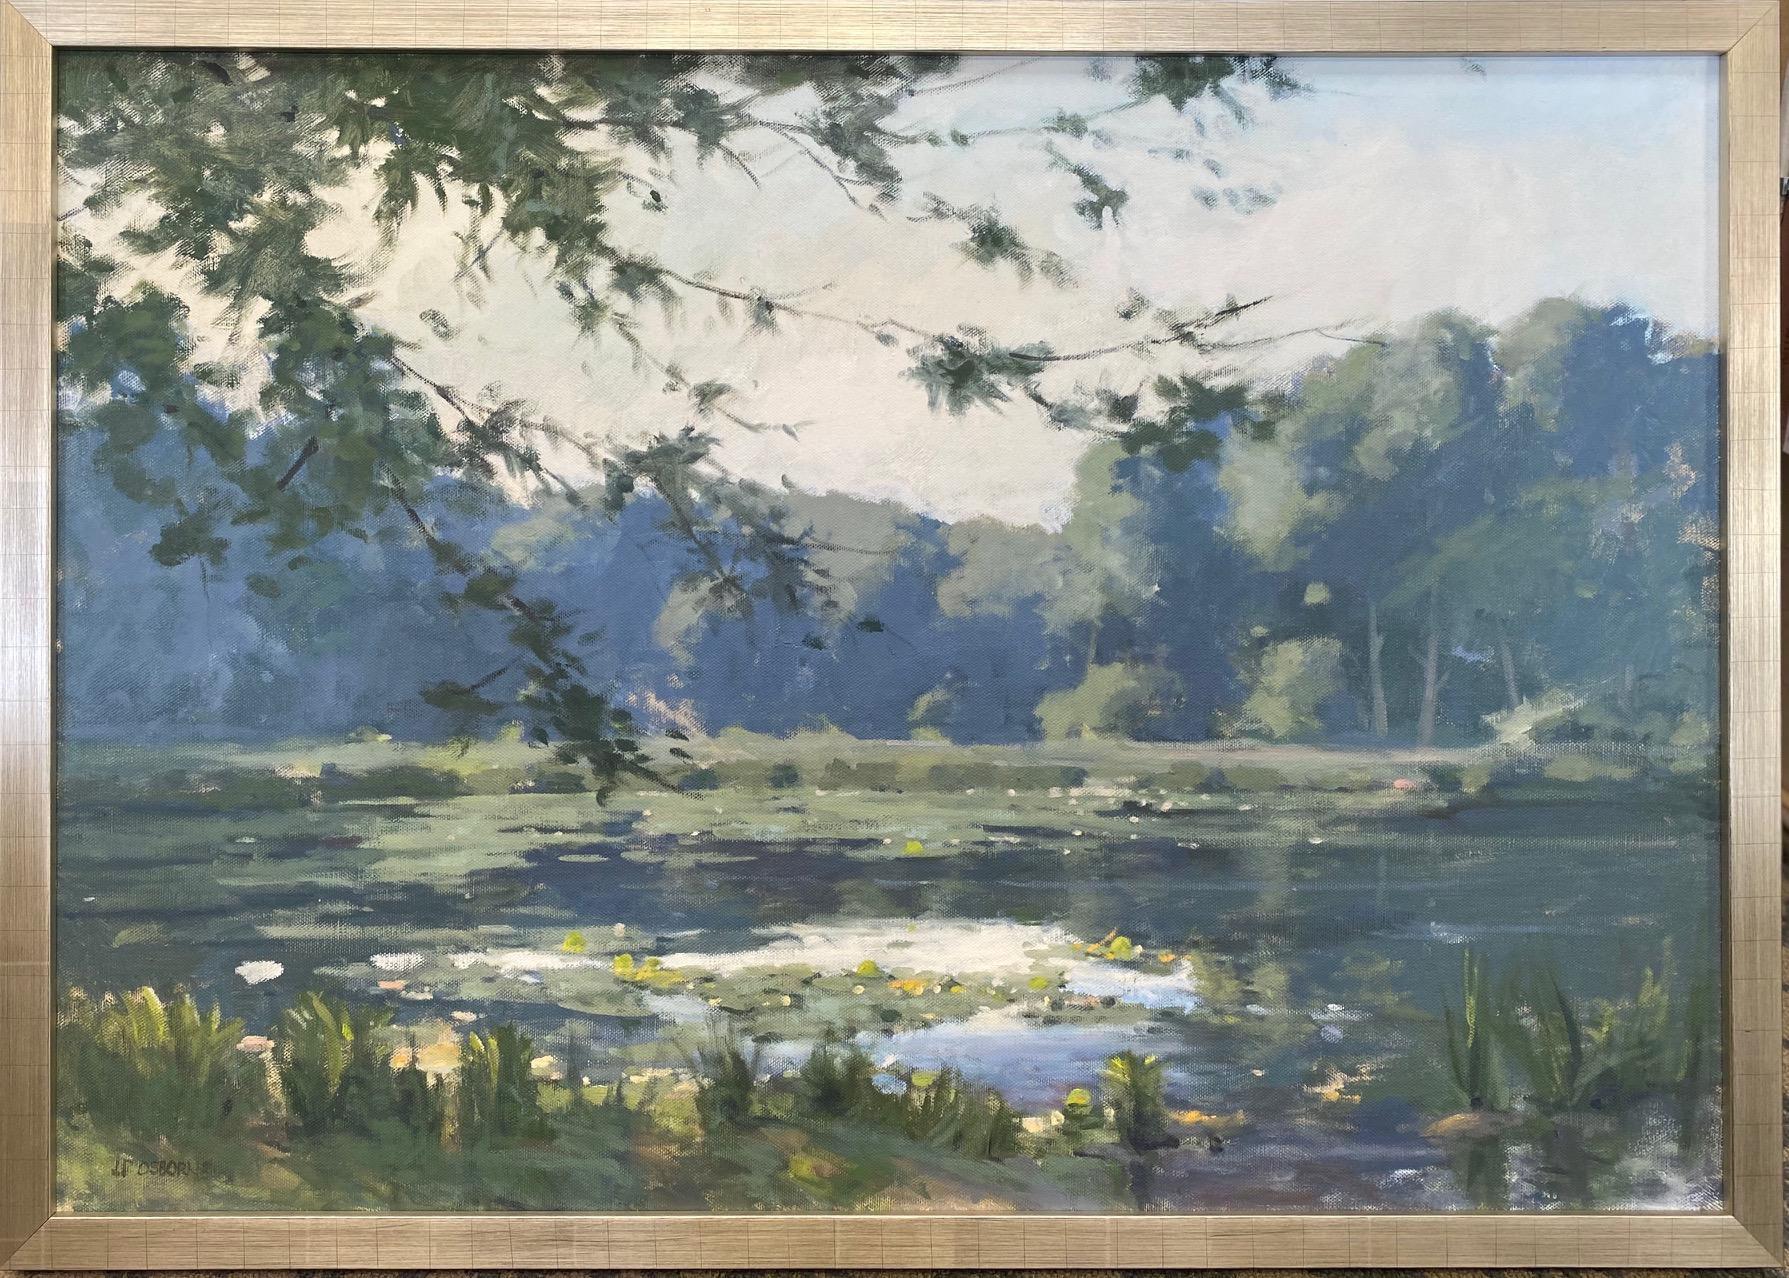 John Phillip Osborne Landscape Painting - The Pond and Lilies, original 28x40 Hudson River School impressionist landscape